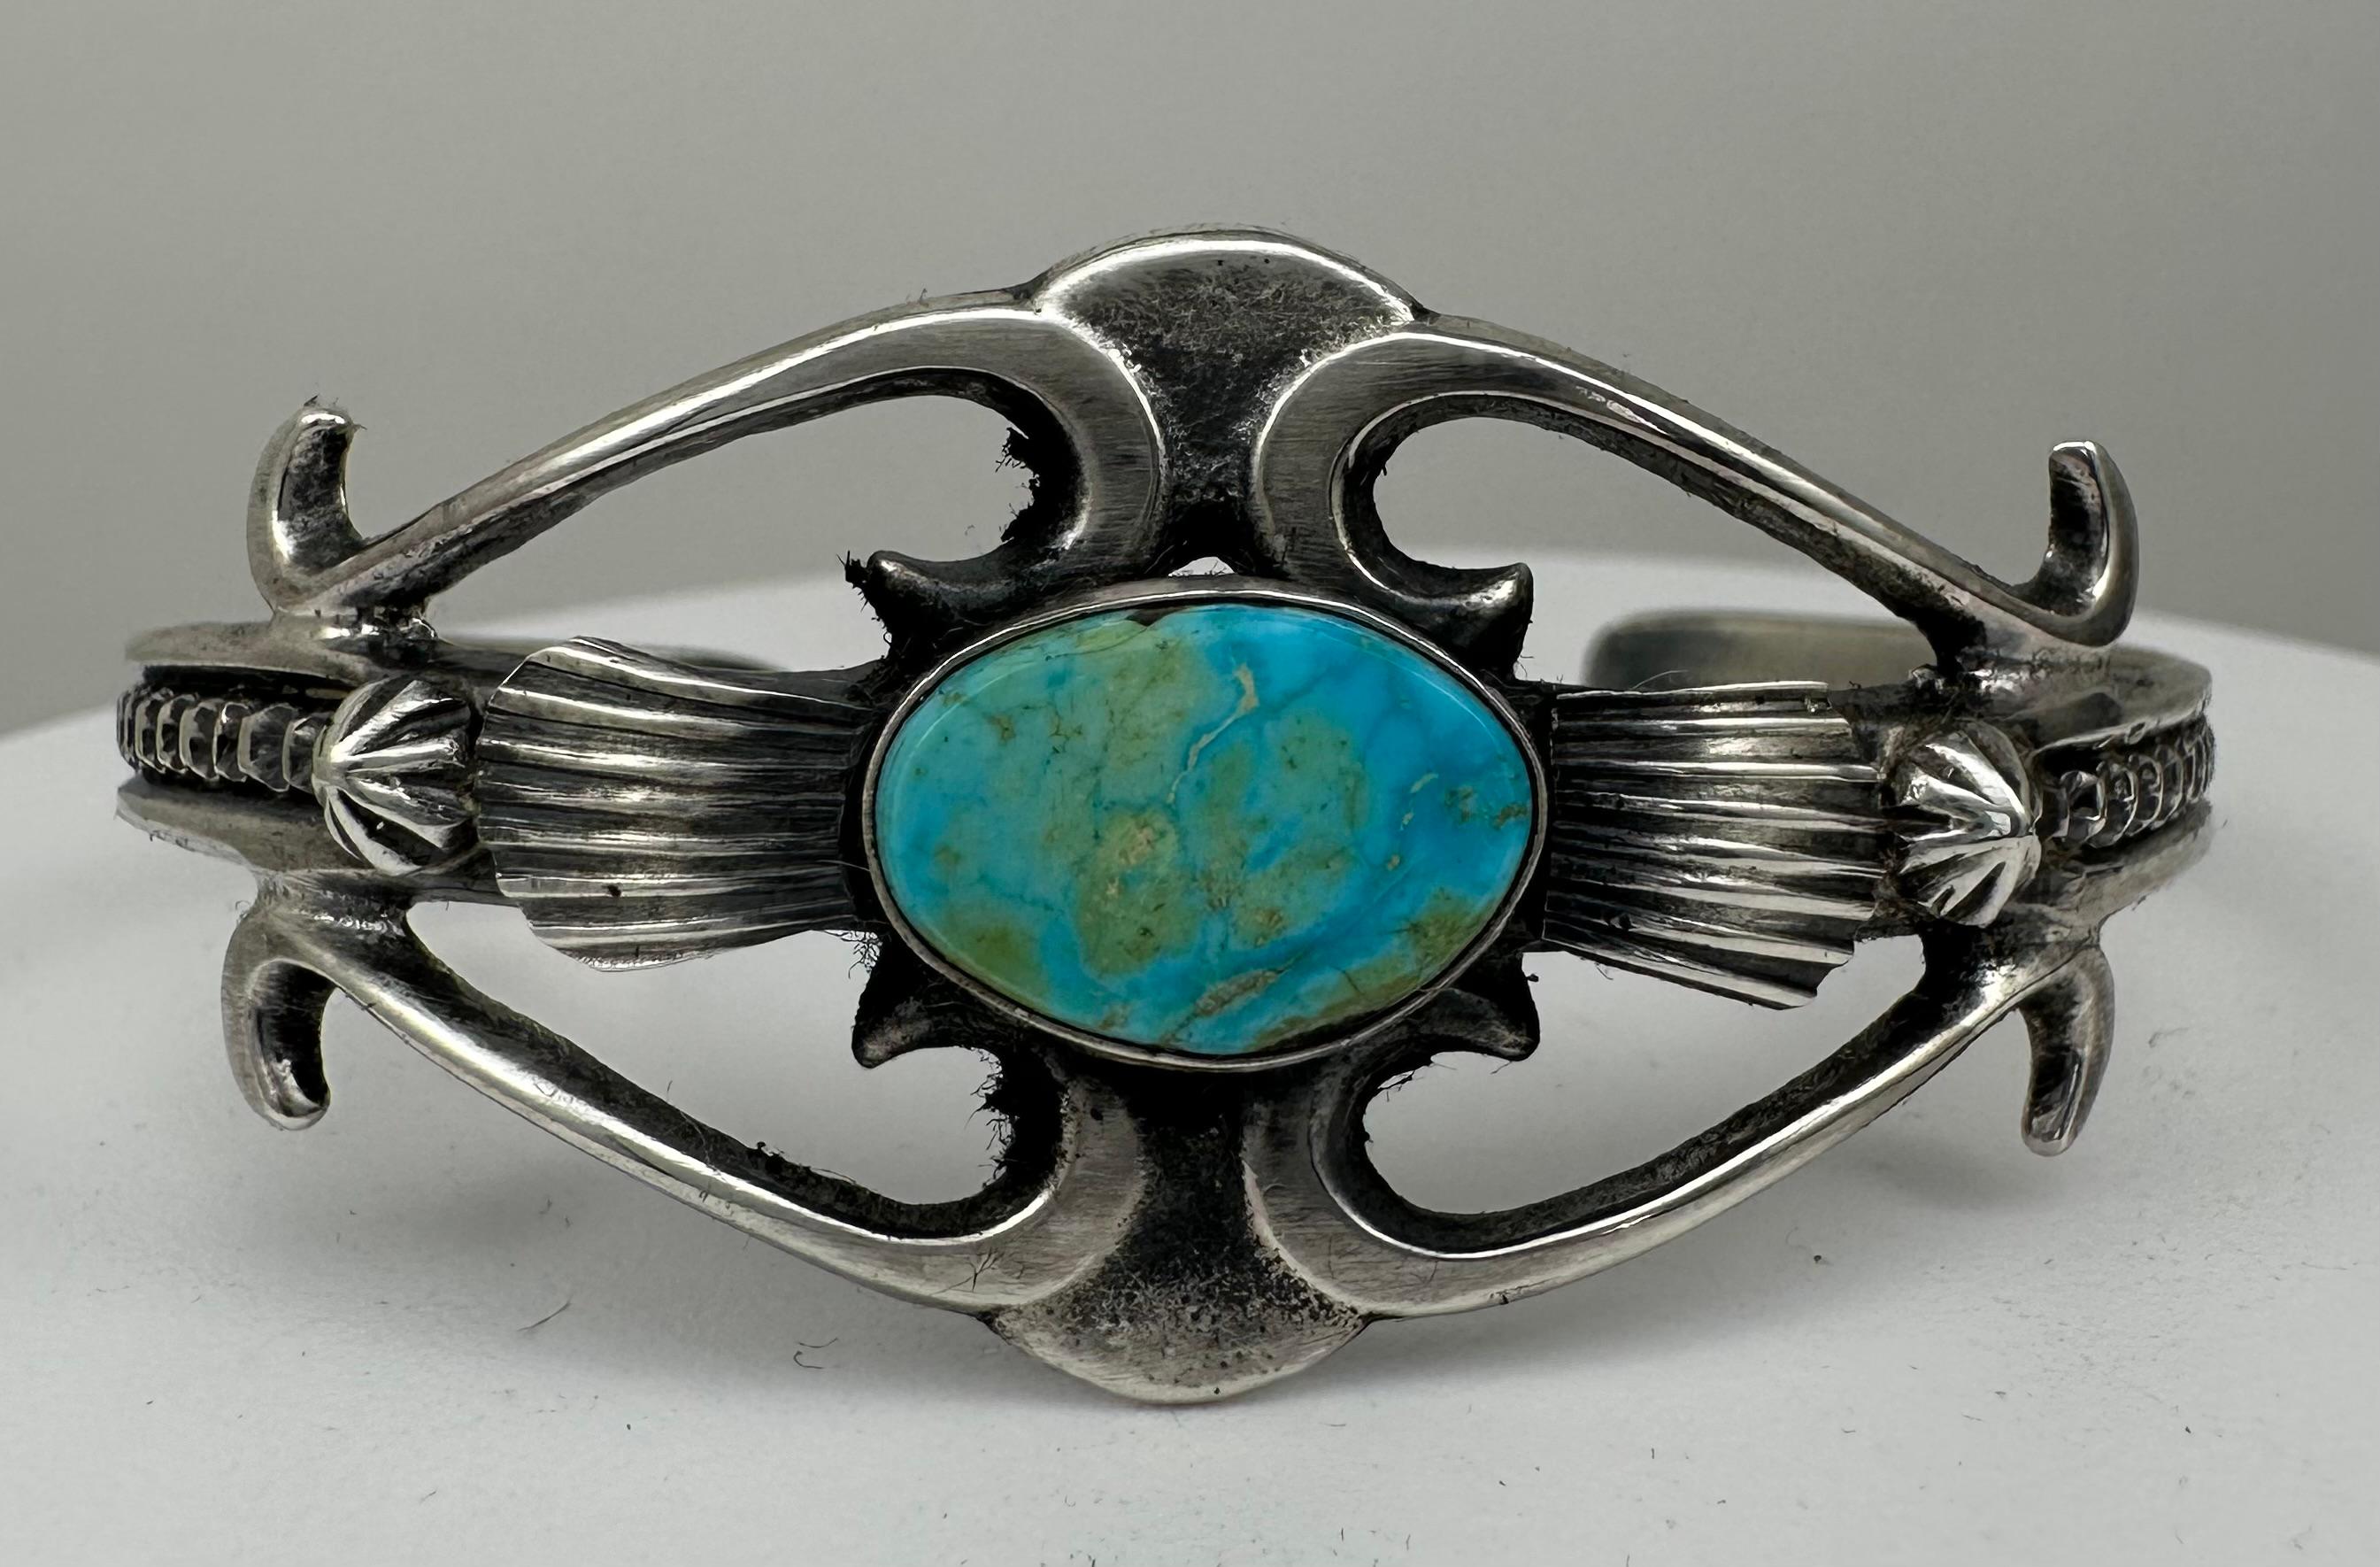 Sterling Silver .925 Kingman Turquoise Cuff Bracelet by Navajo Artist Henry Morgan
2 1/2